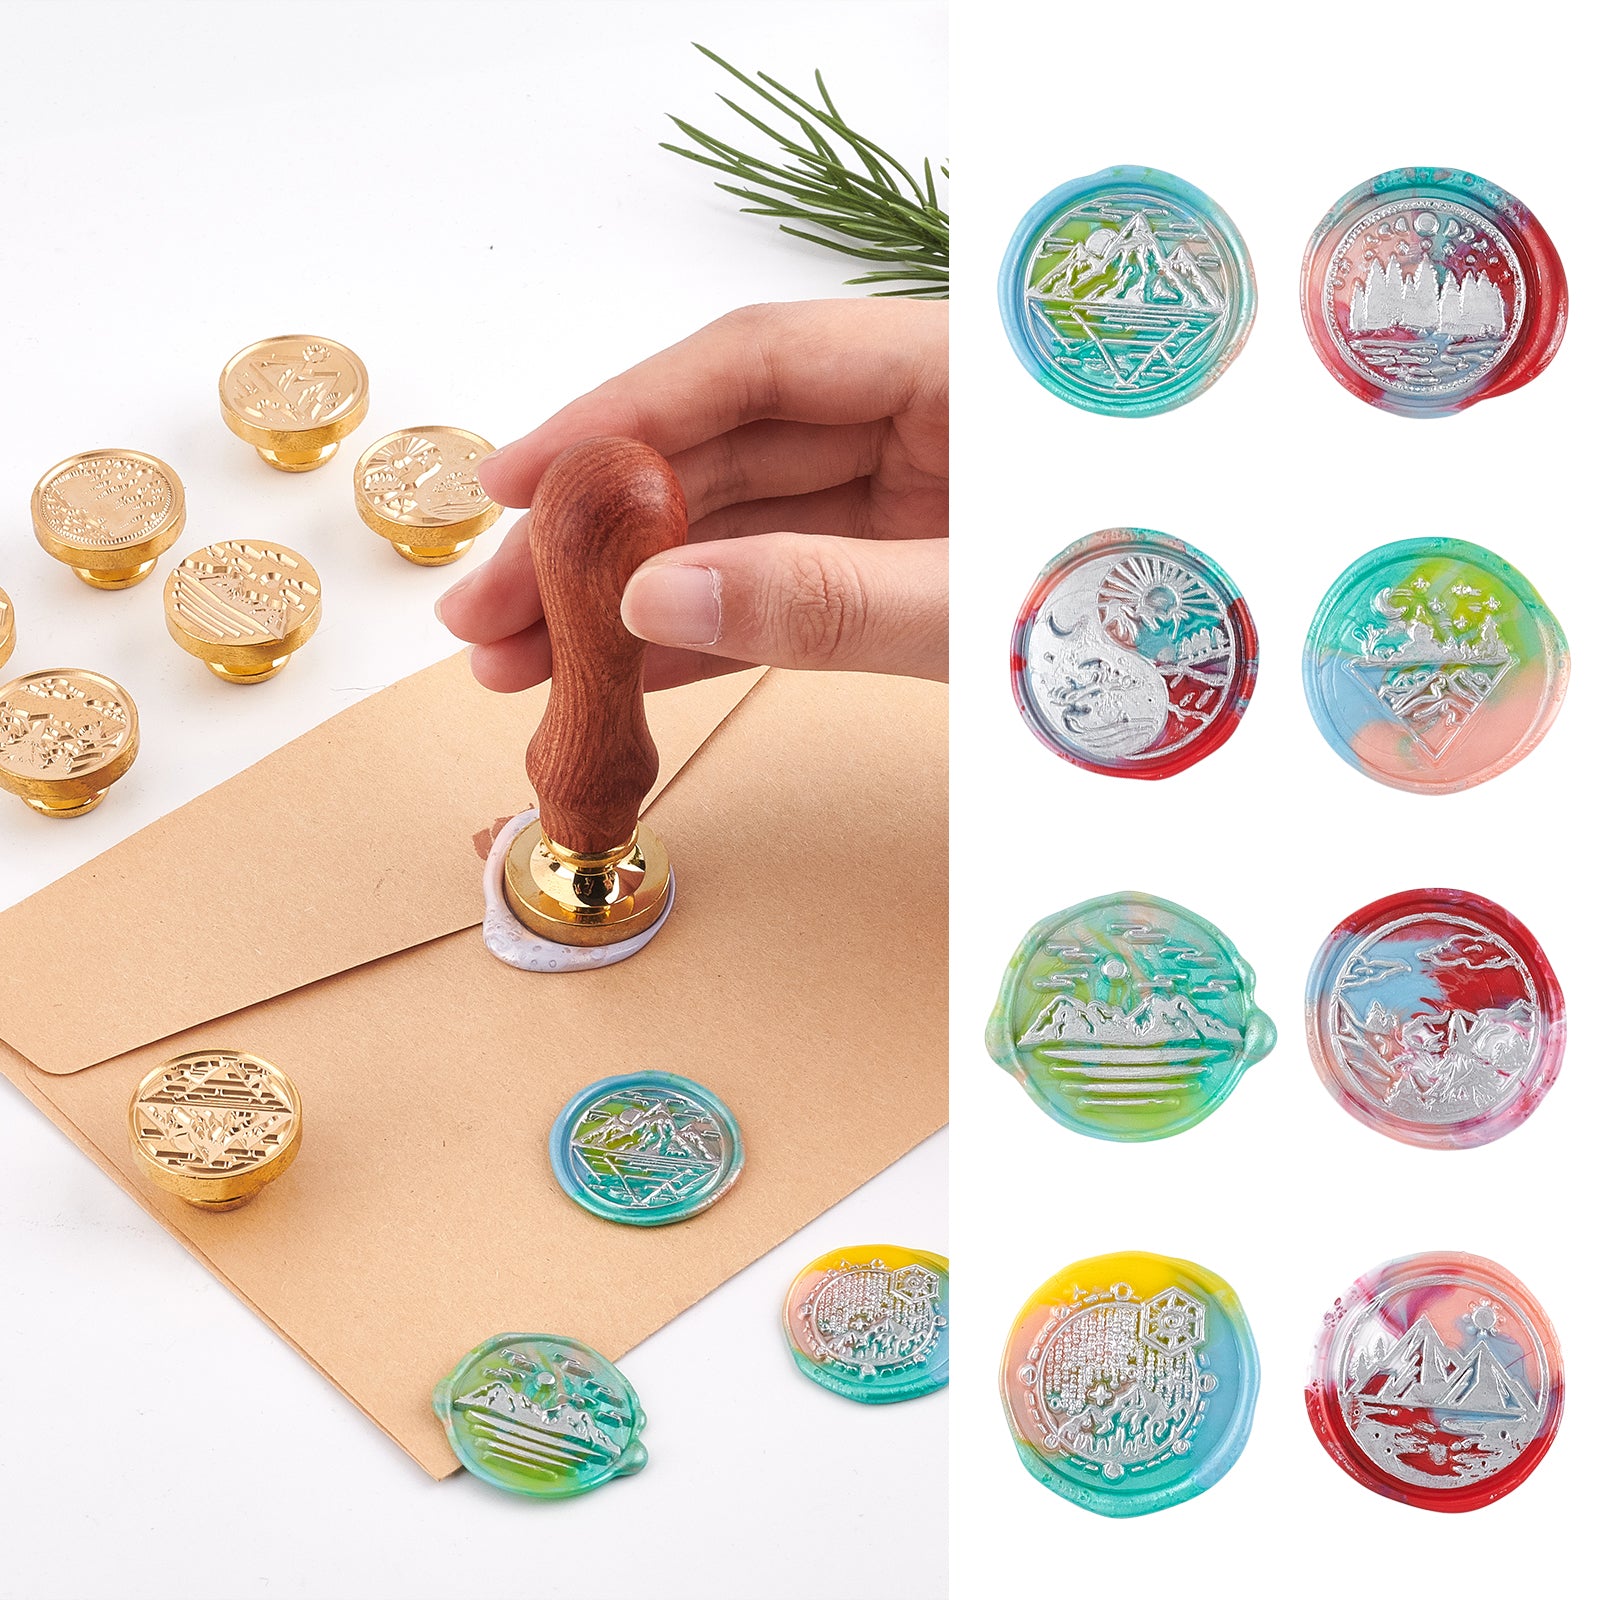 10PCS Wax Seal Stamp Set (Natural Scenery Theme)